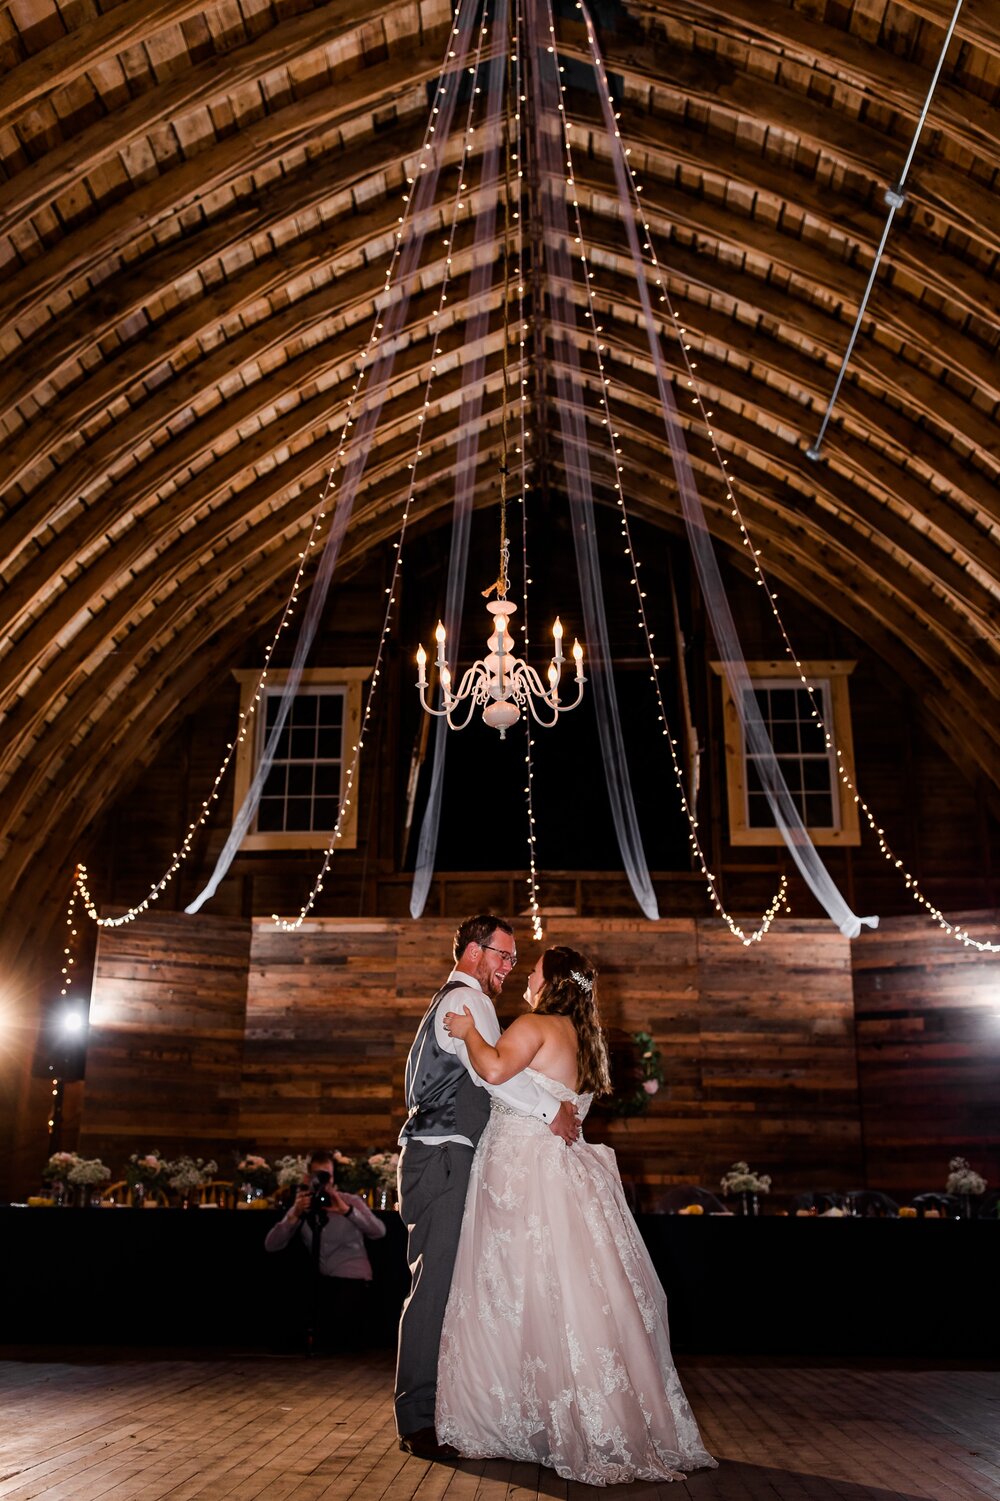 Amber Langerud Photography_Lake Park Minnesota, Outdoor Barn Wedding With Horses_7022.jpg